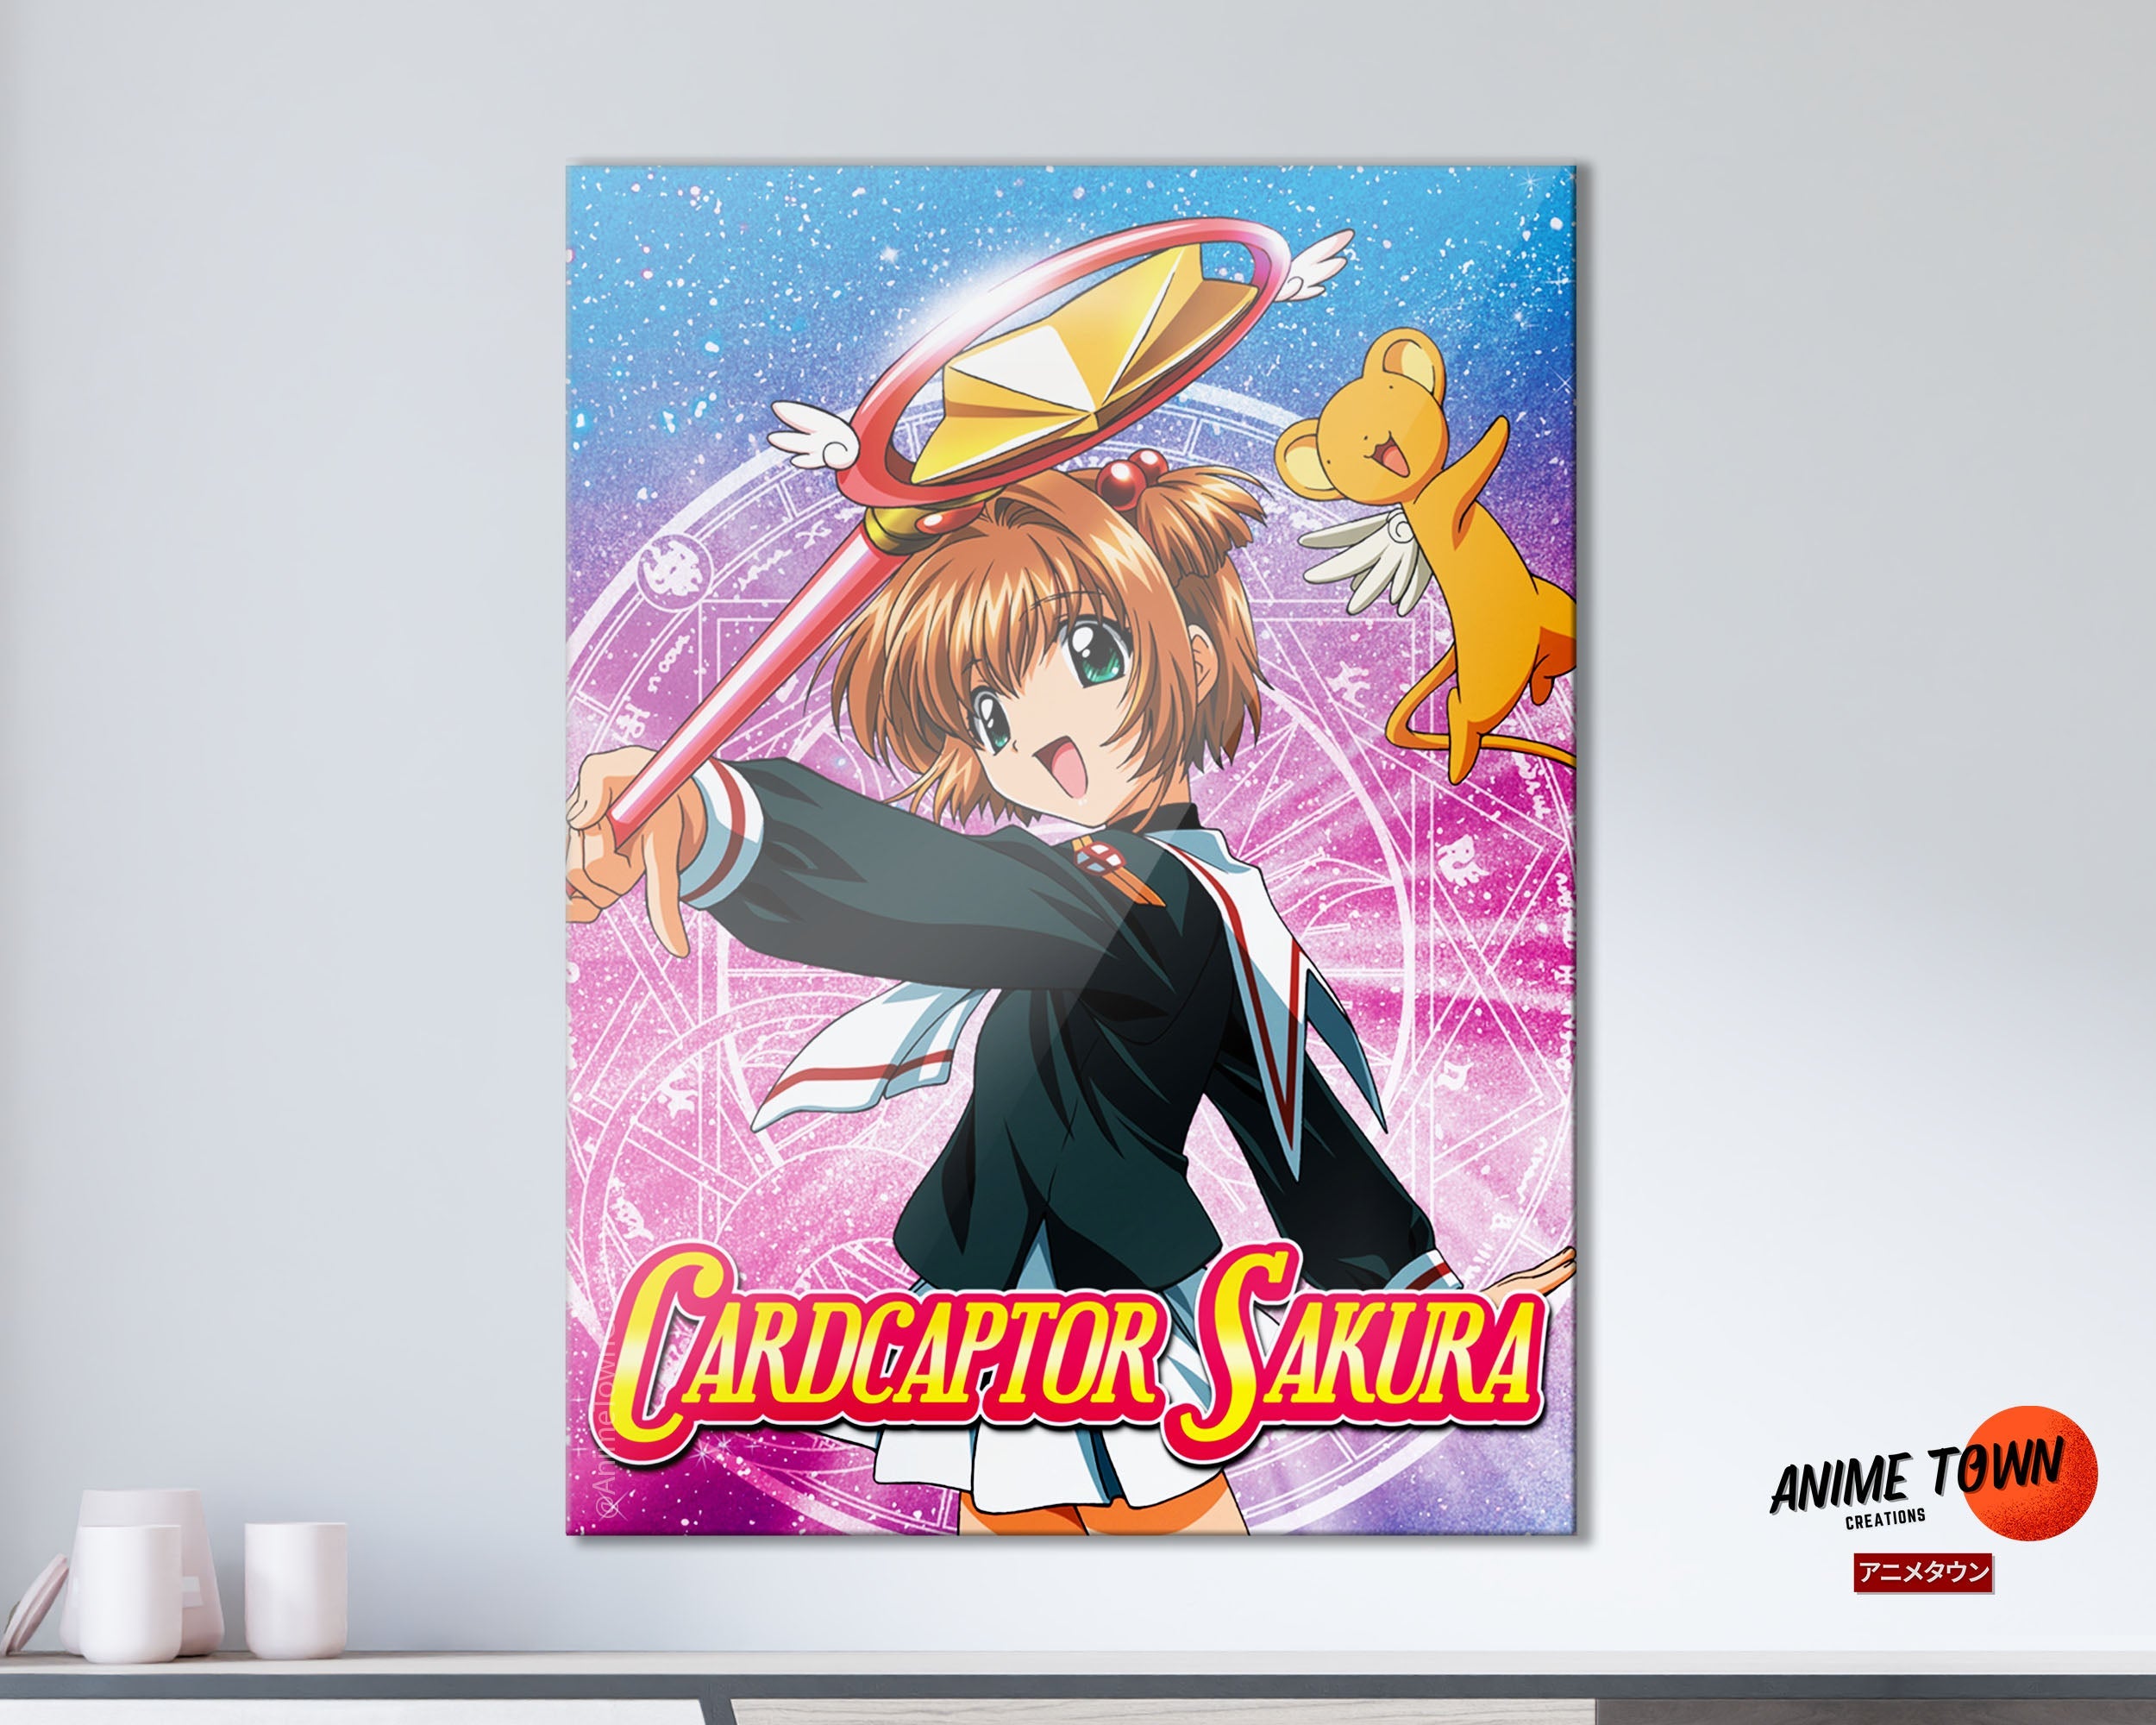 Cardcaptor Sakura Posters Online - Shop Unique Metal Prints